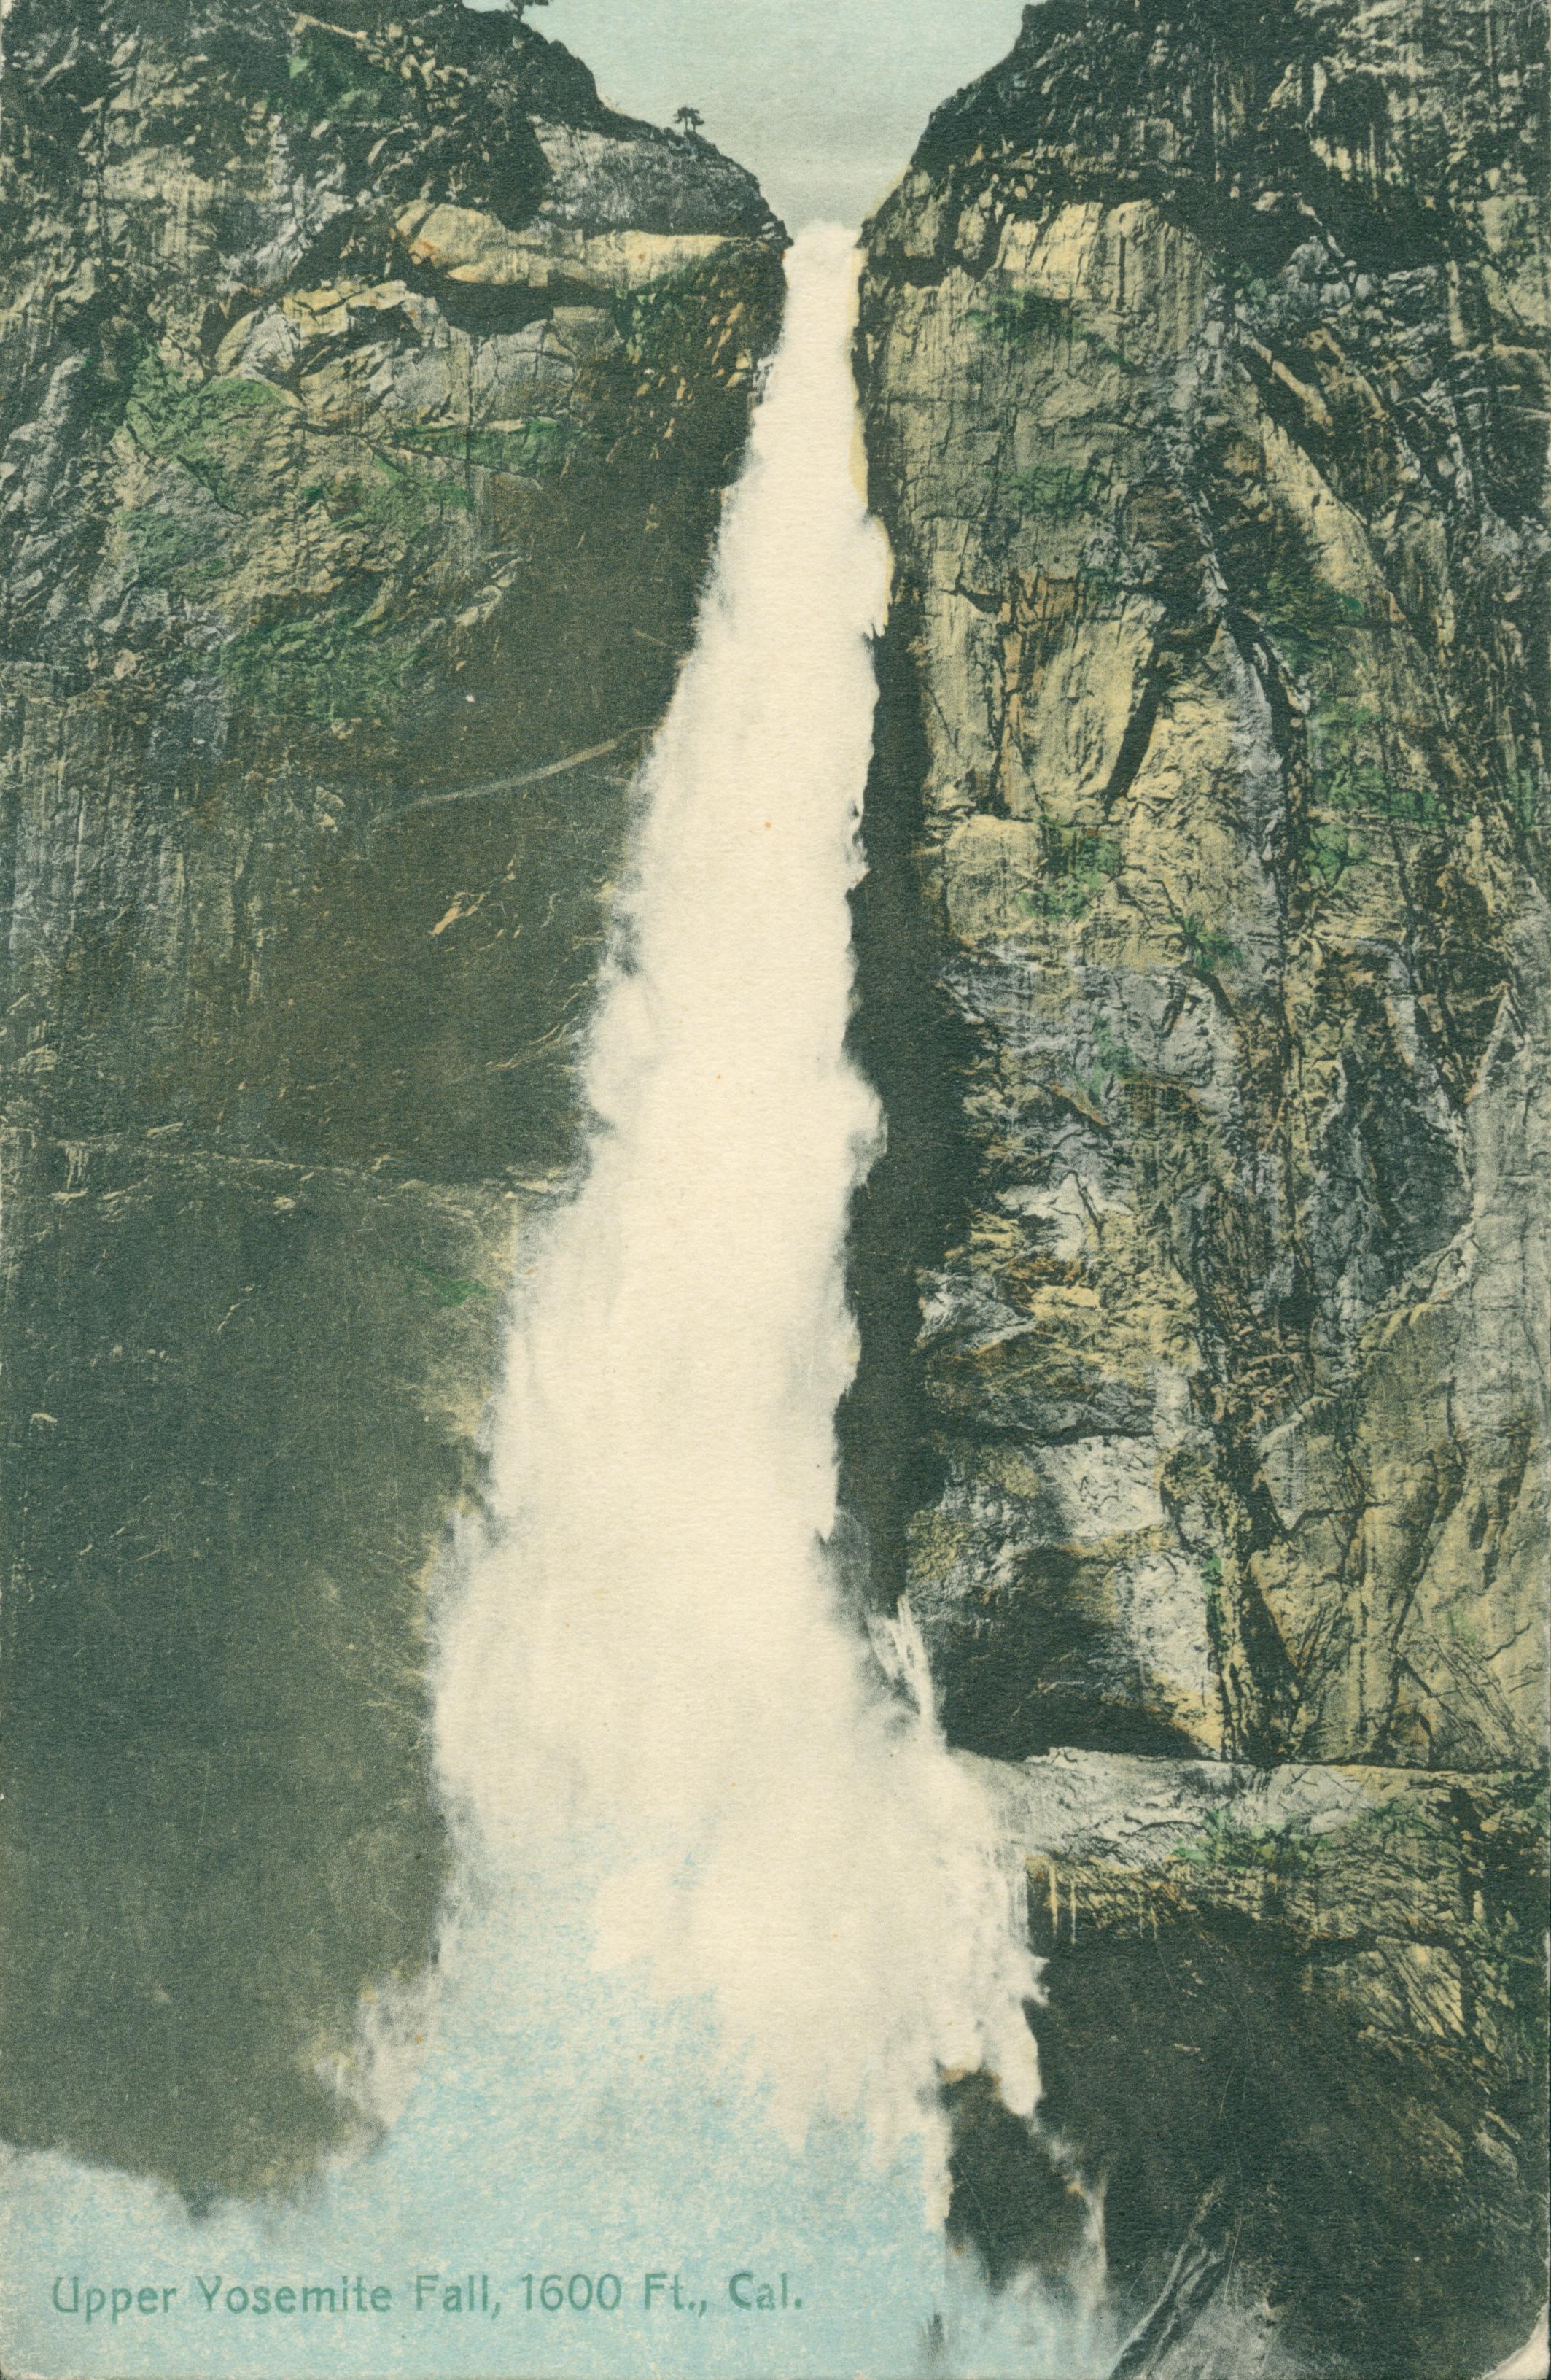 Shows a view of Yosemite Falls